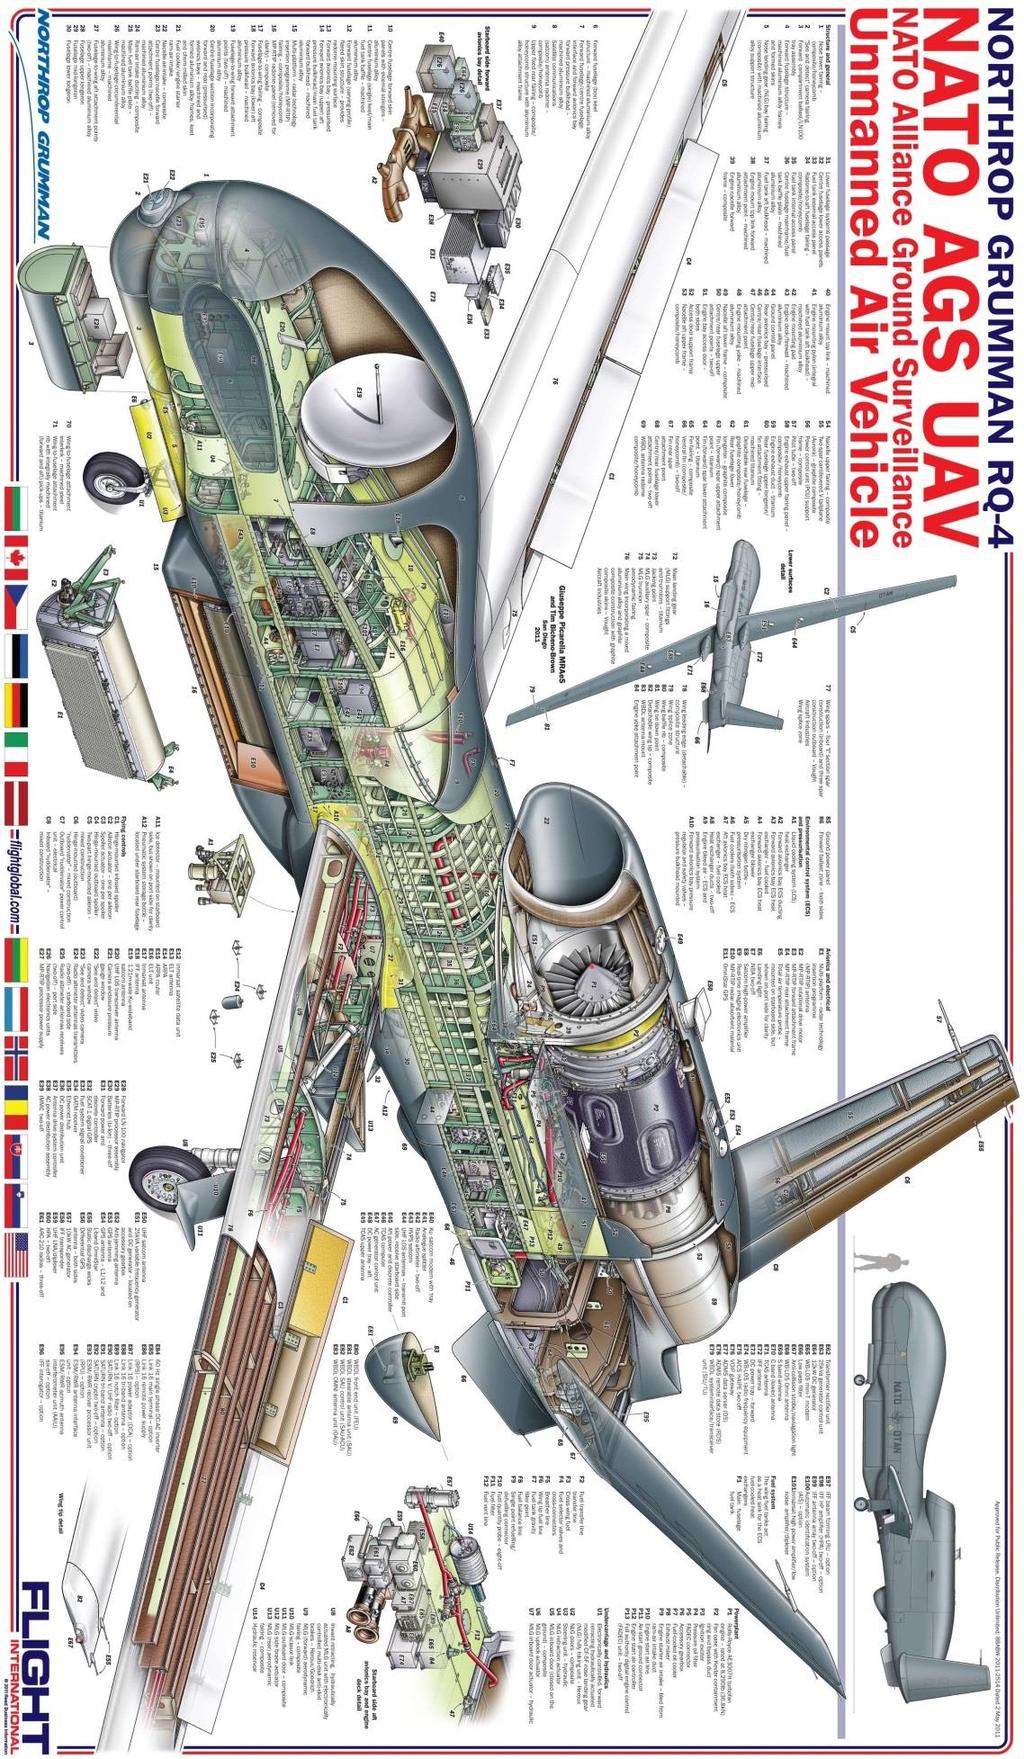 Obr. 22 RQ-4 Global Hawk v